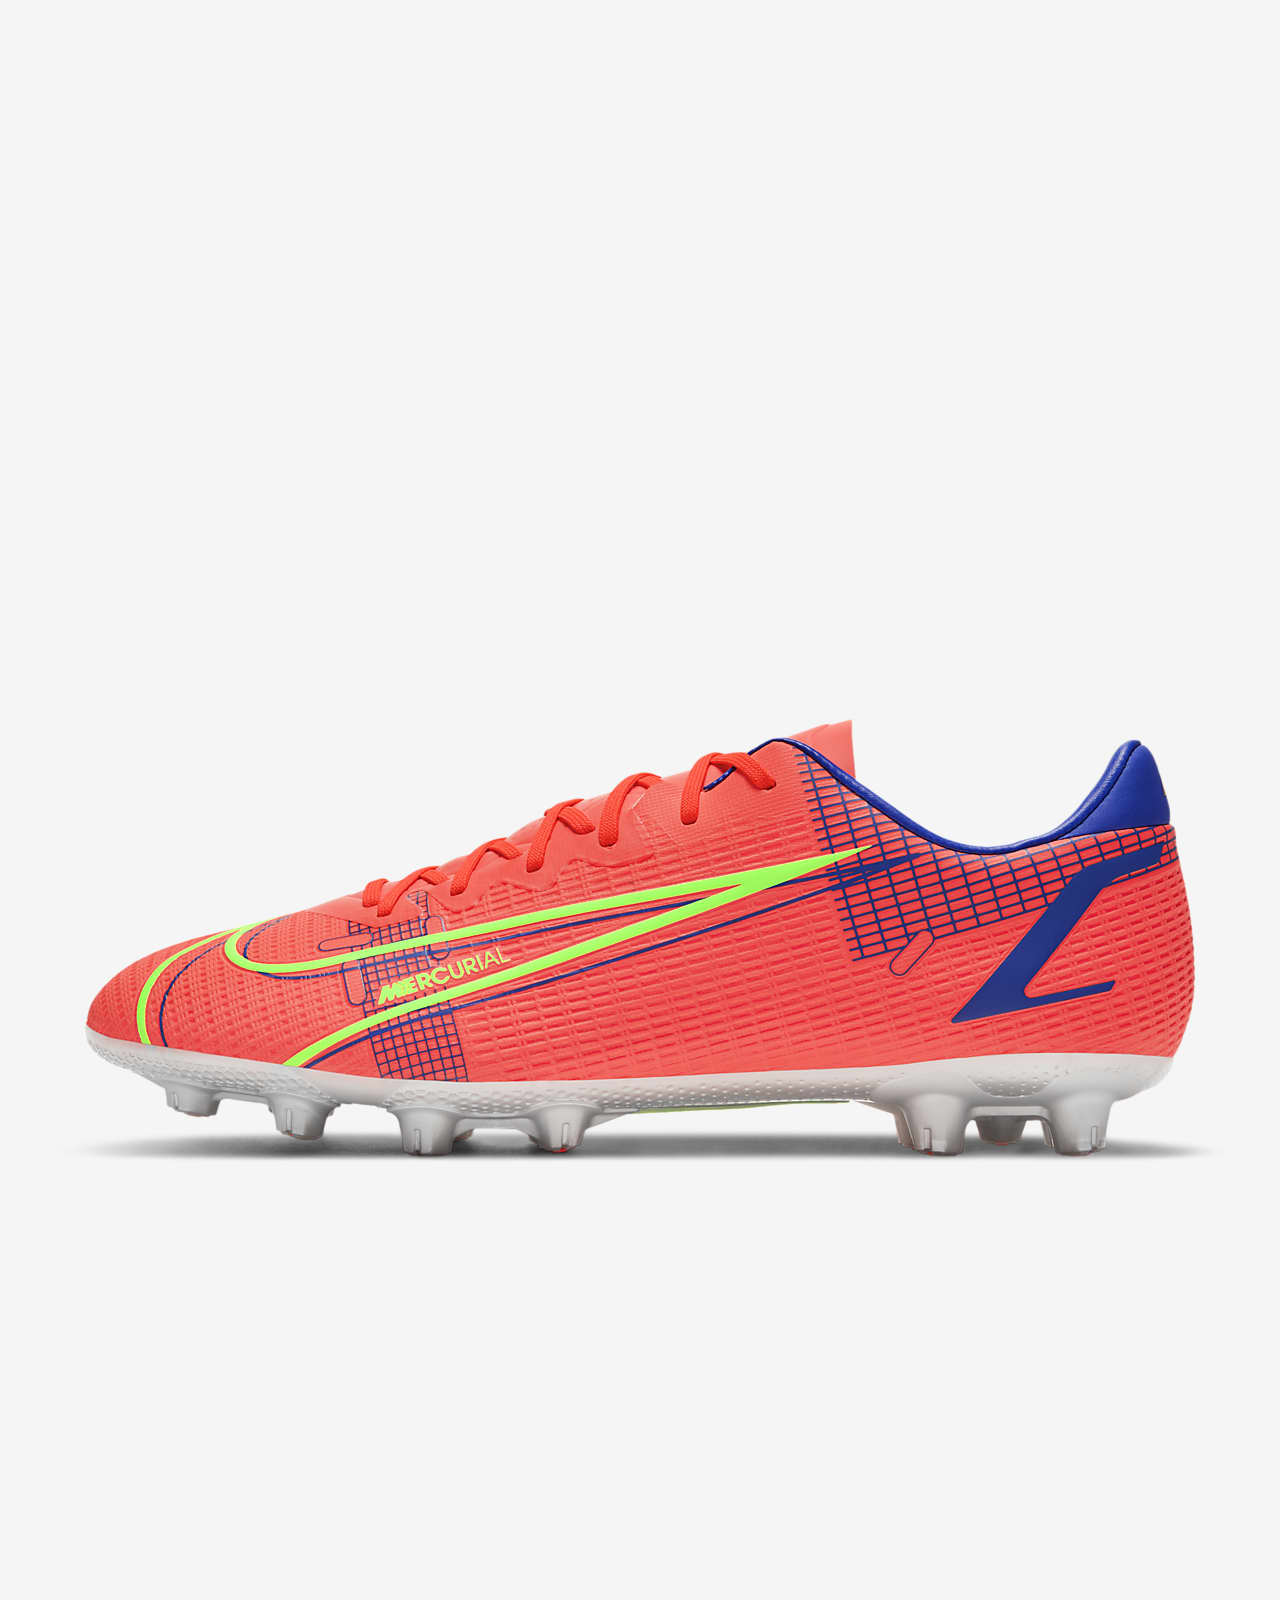 vapor soccer shoes